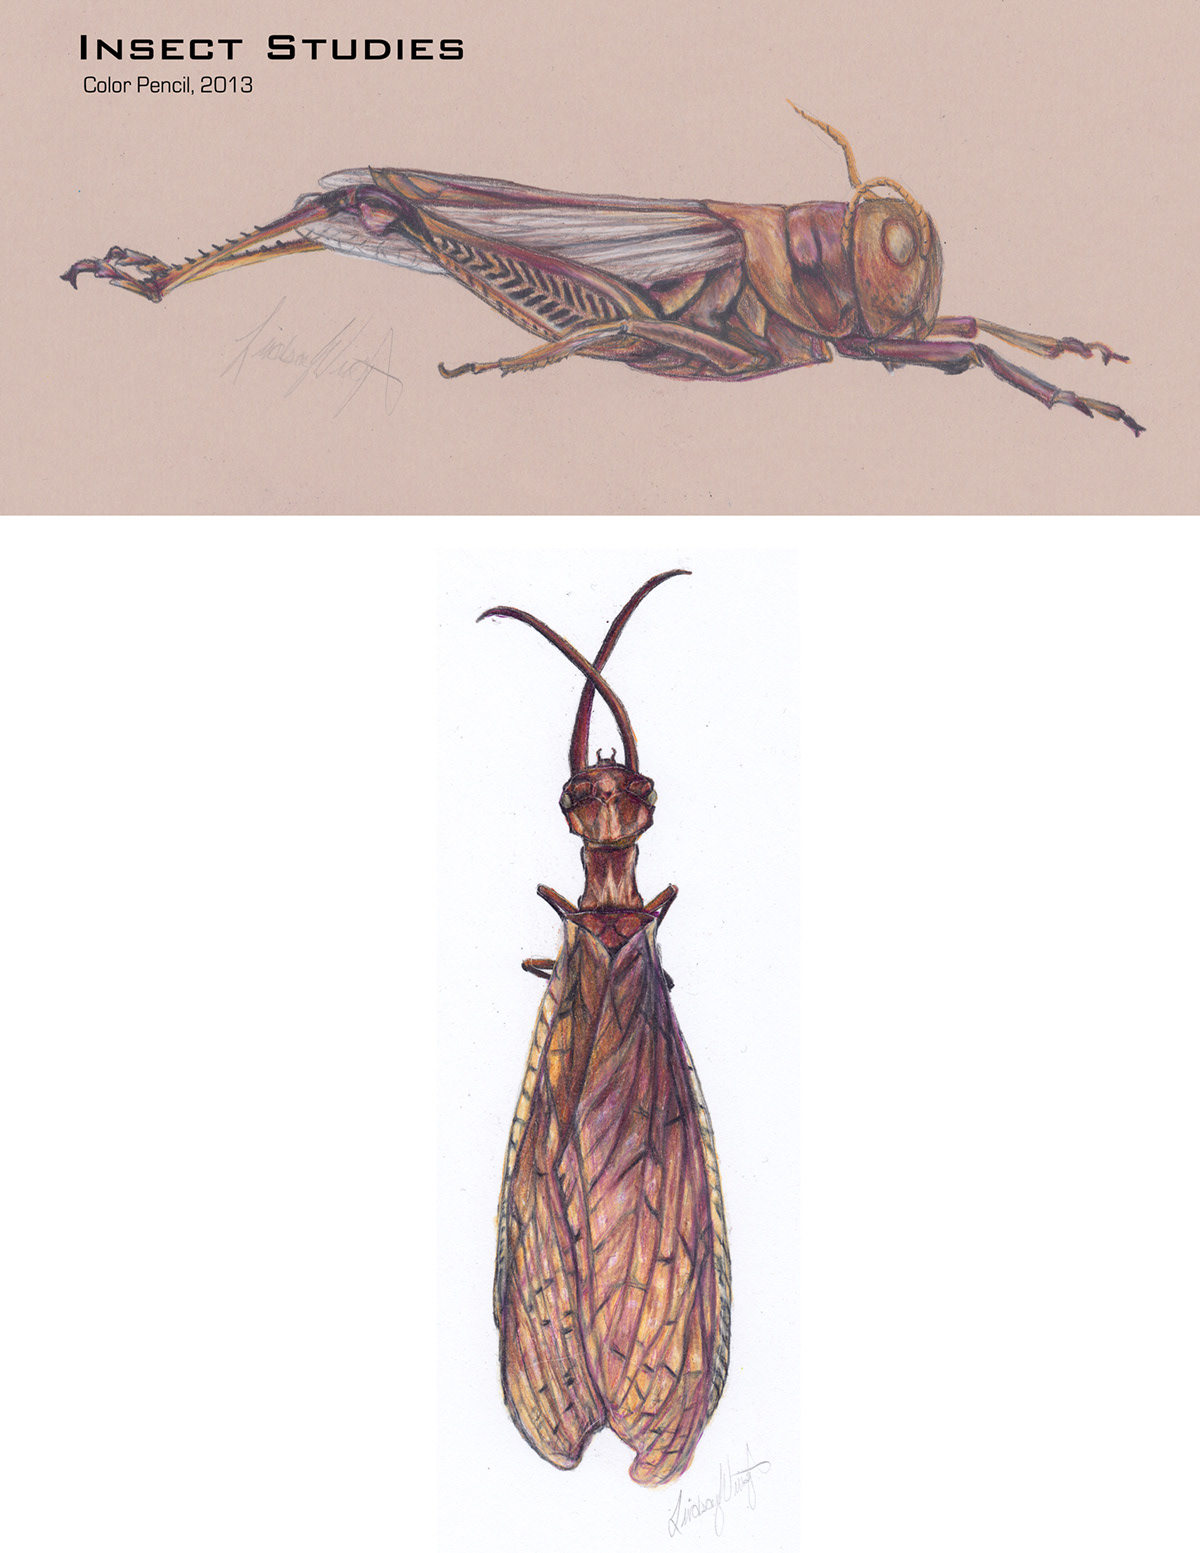 arthropods Insects bugs fireflies lighteningbugs Atlas Moth wasp hornet dragonfly hitleri beetle entymology